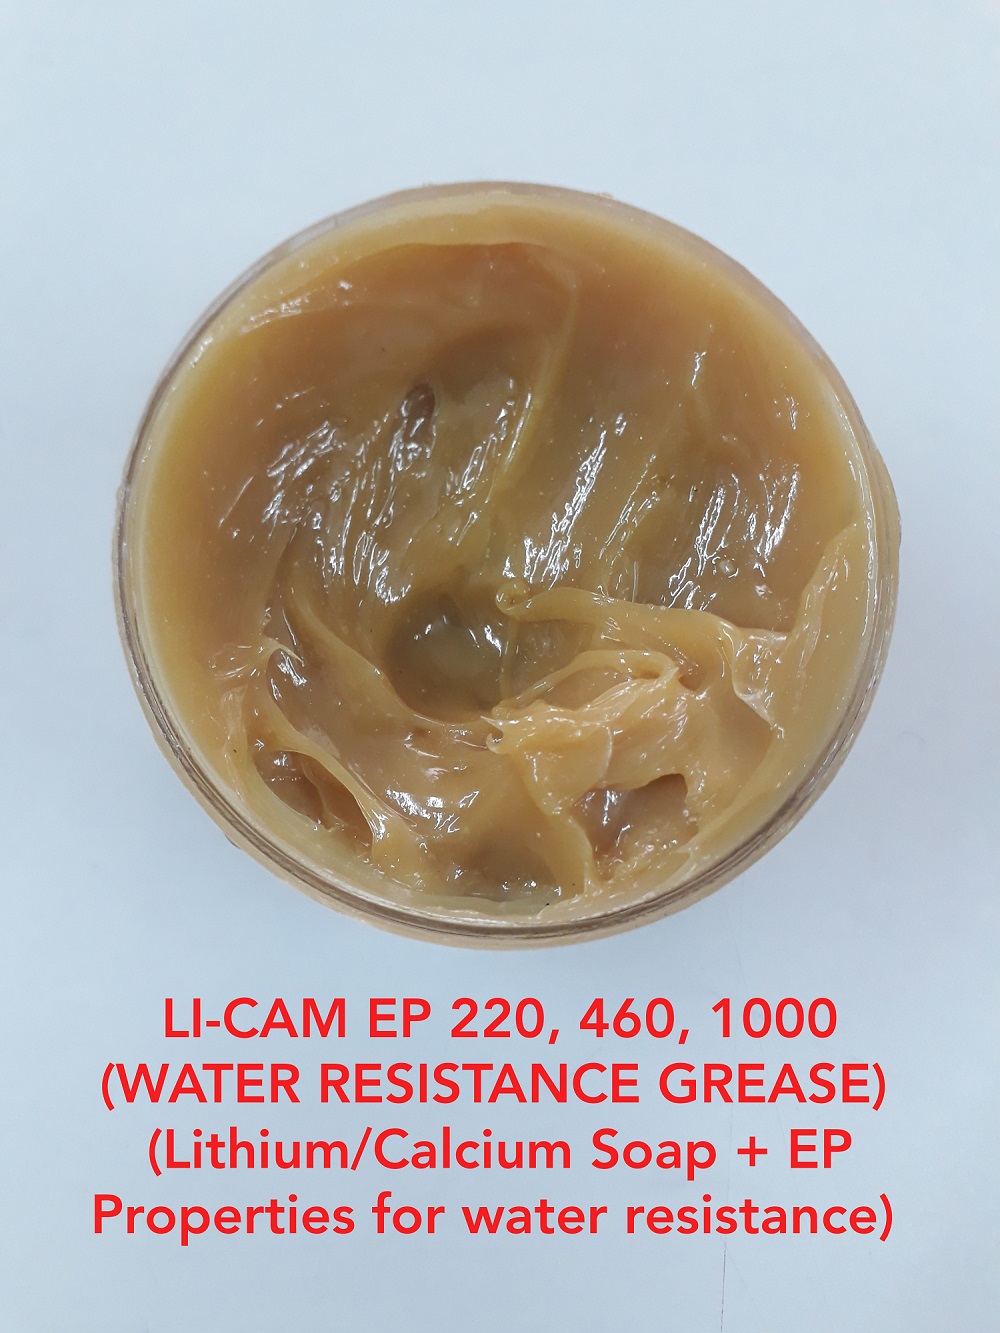 LI-CAM EP 220, 460, 1000 (Water Resistance Grease)